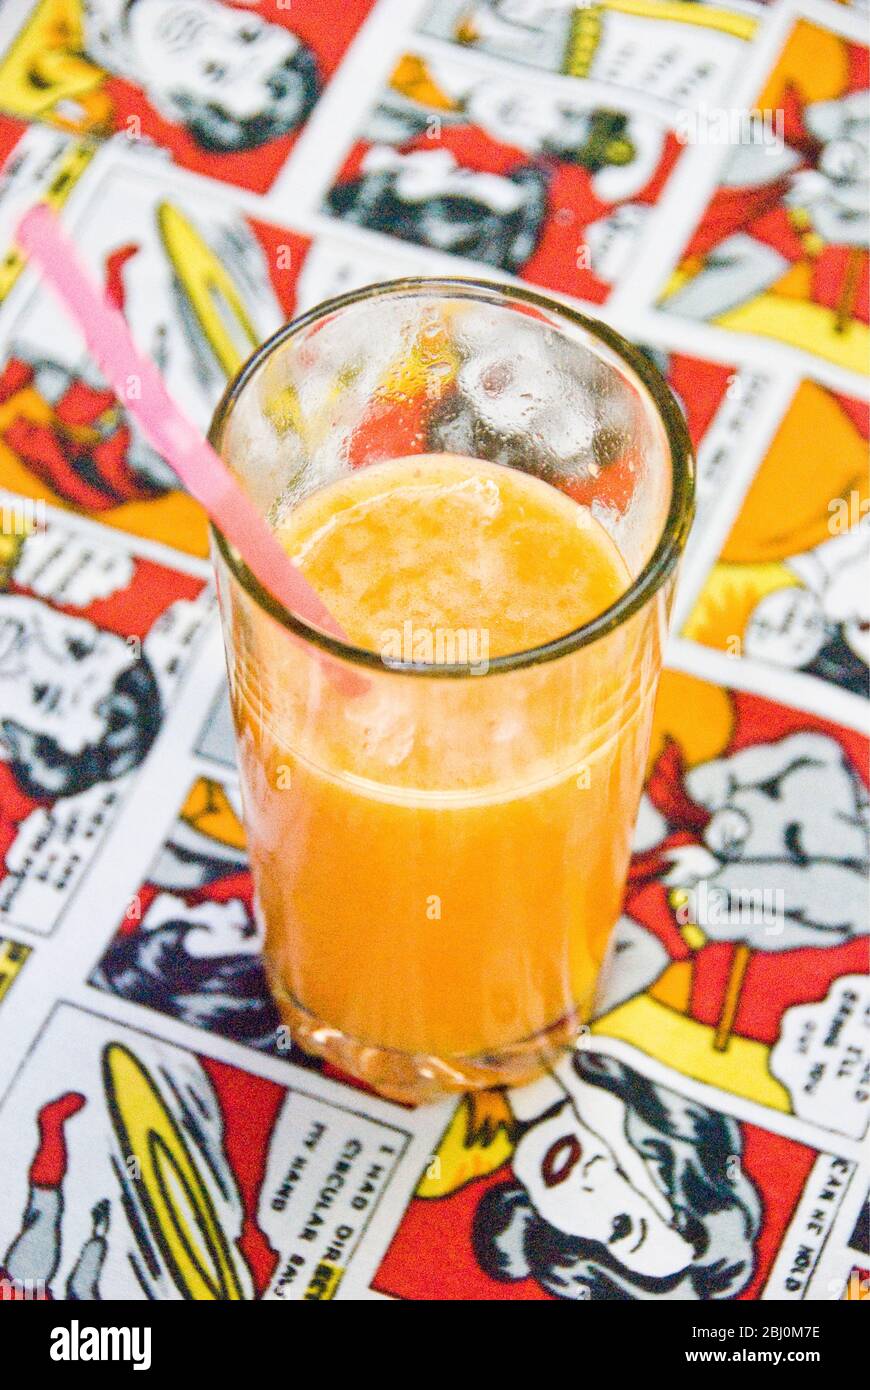 Zumo de naranja recién exprimido en un café de cristal sobre tela de mesa con un dibujo de tiras cómicas - Foto de stock